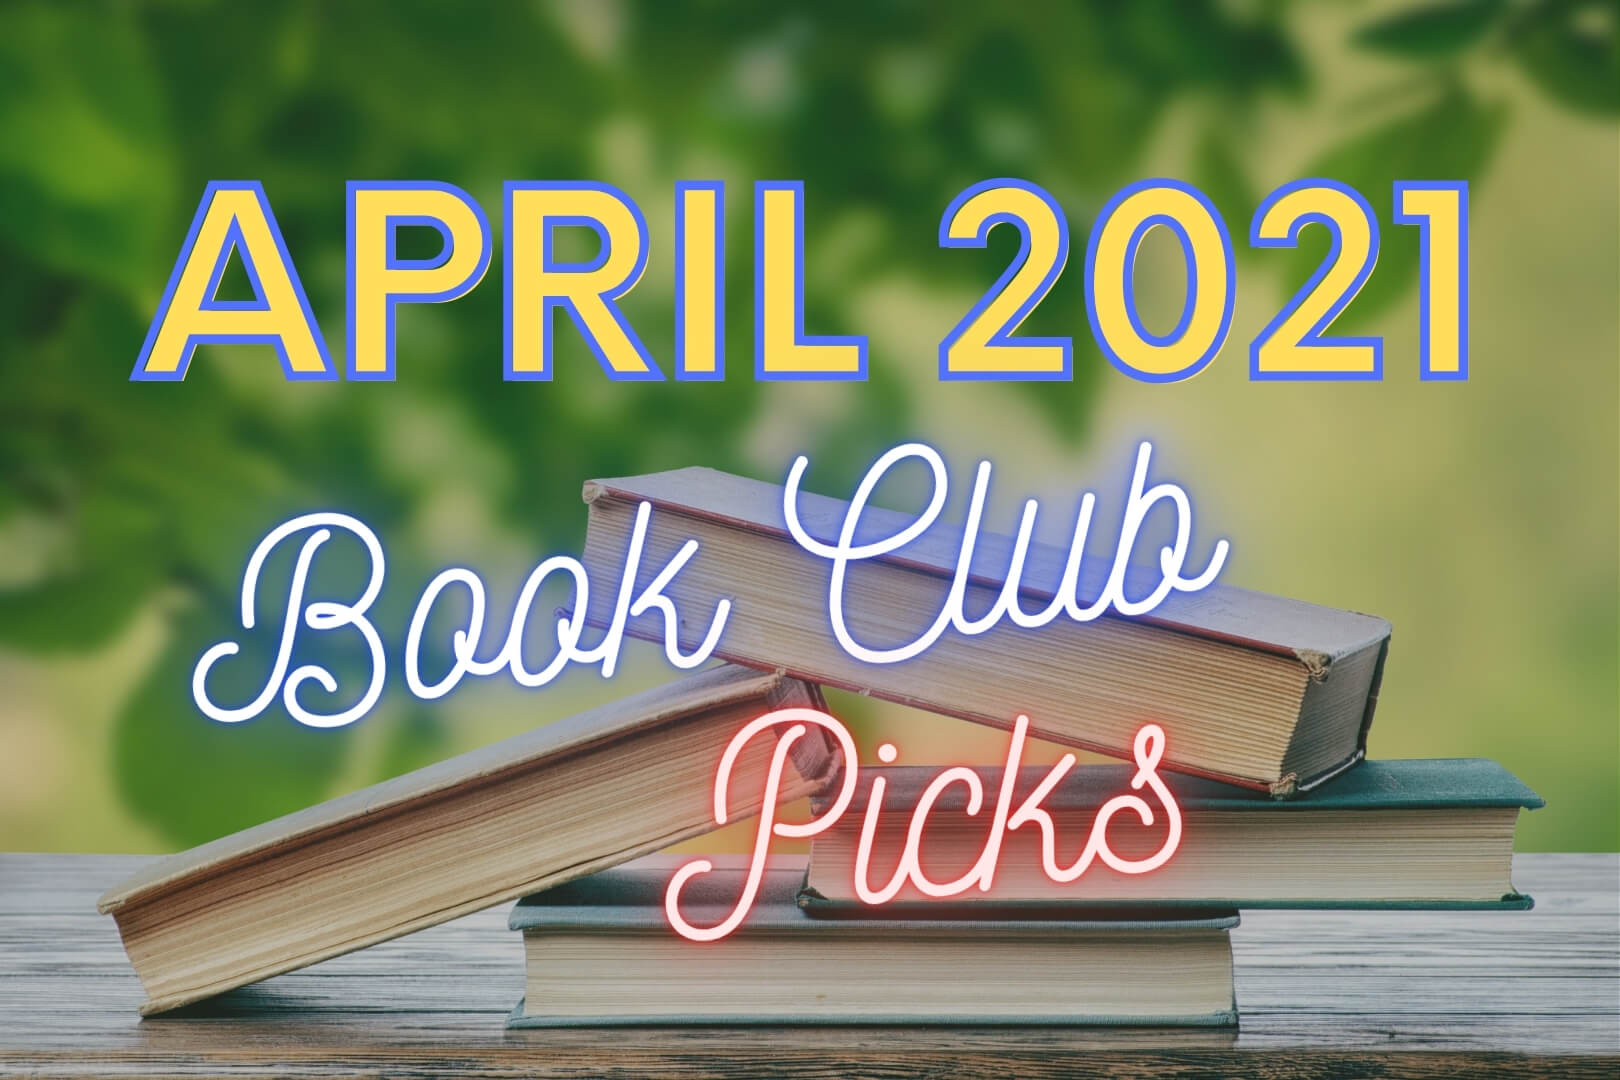 Book Club Picks for April 2021